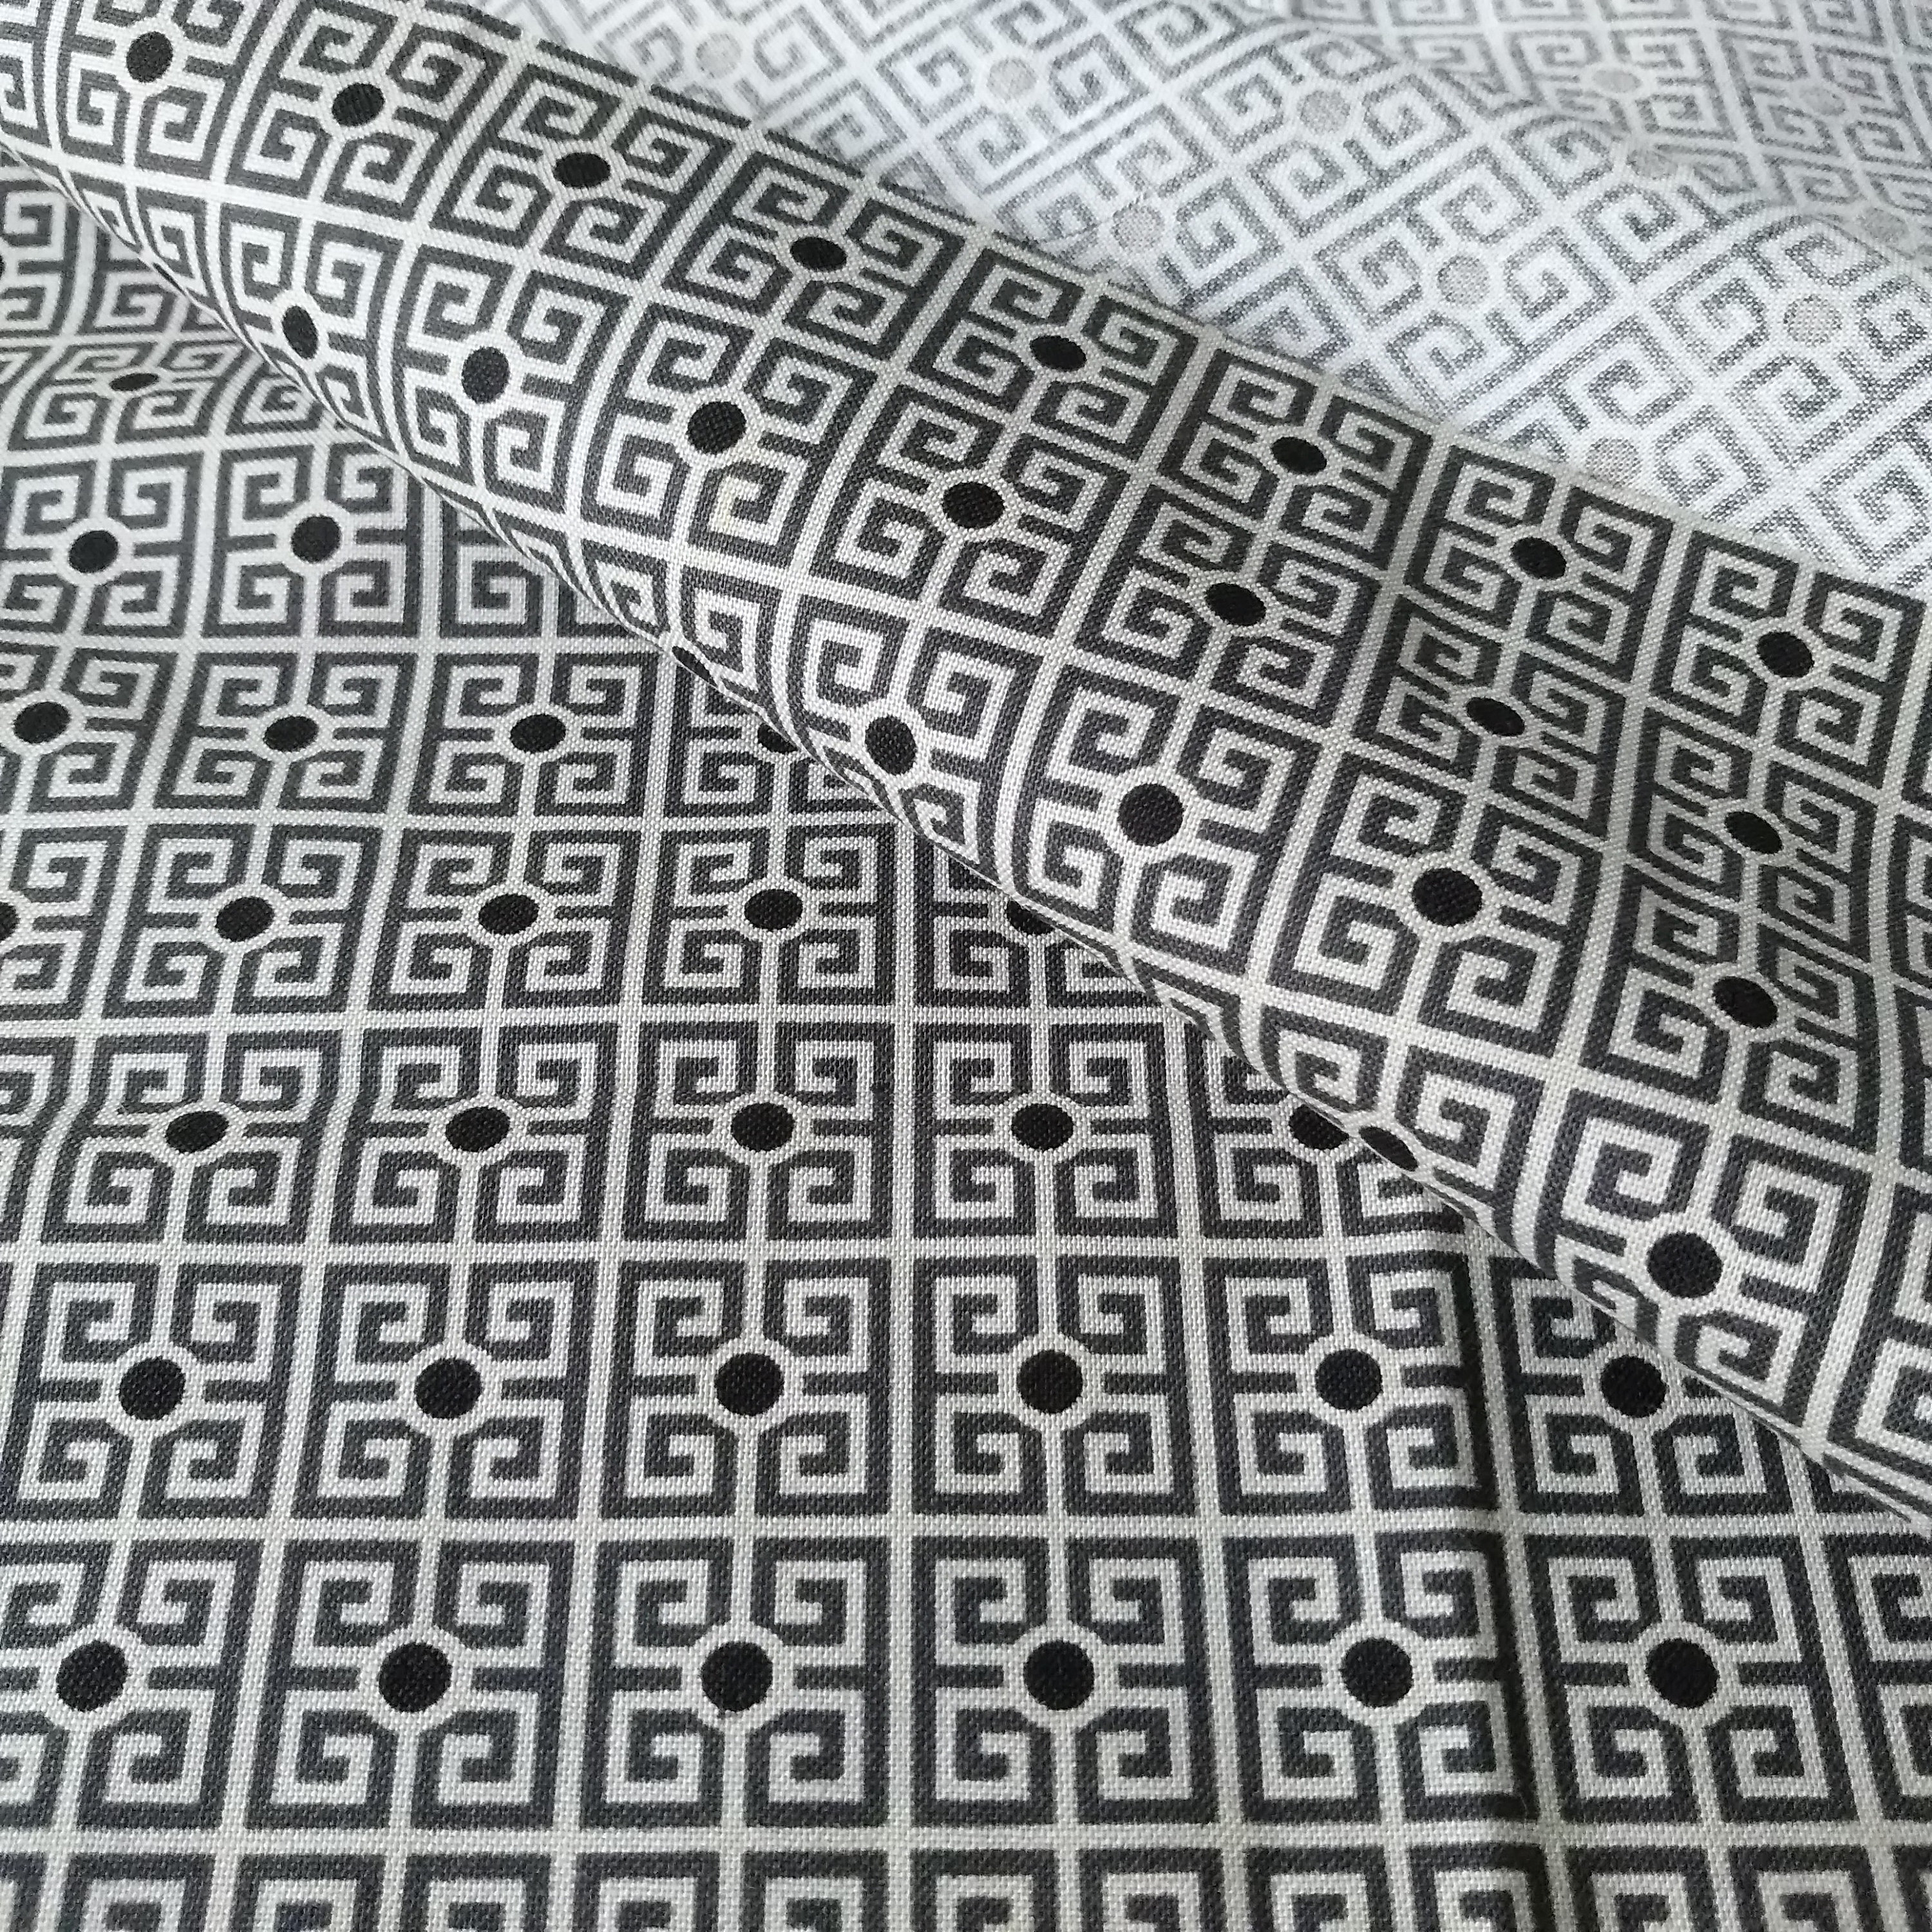 Aqua Greek Key Upholstery Fabric for Furniture Grey Stain